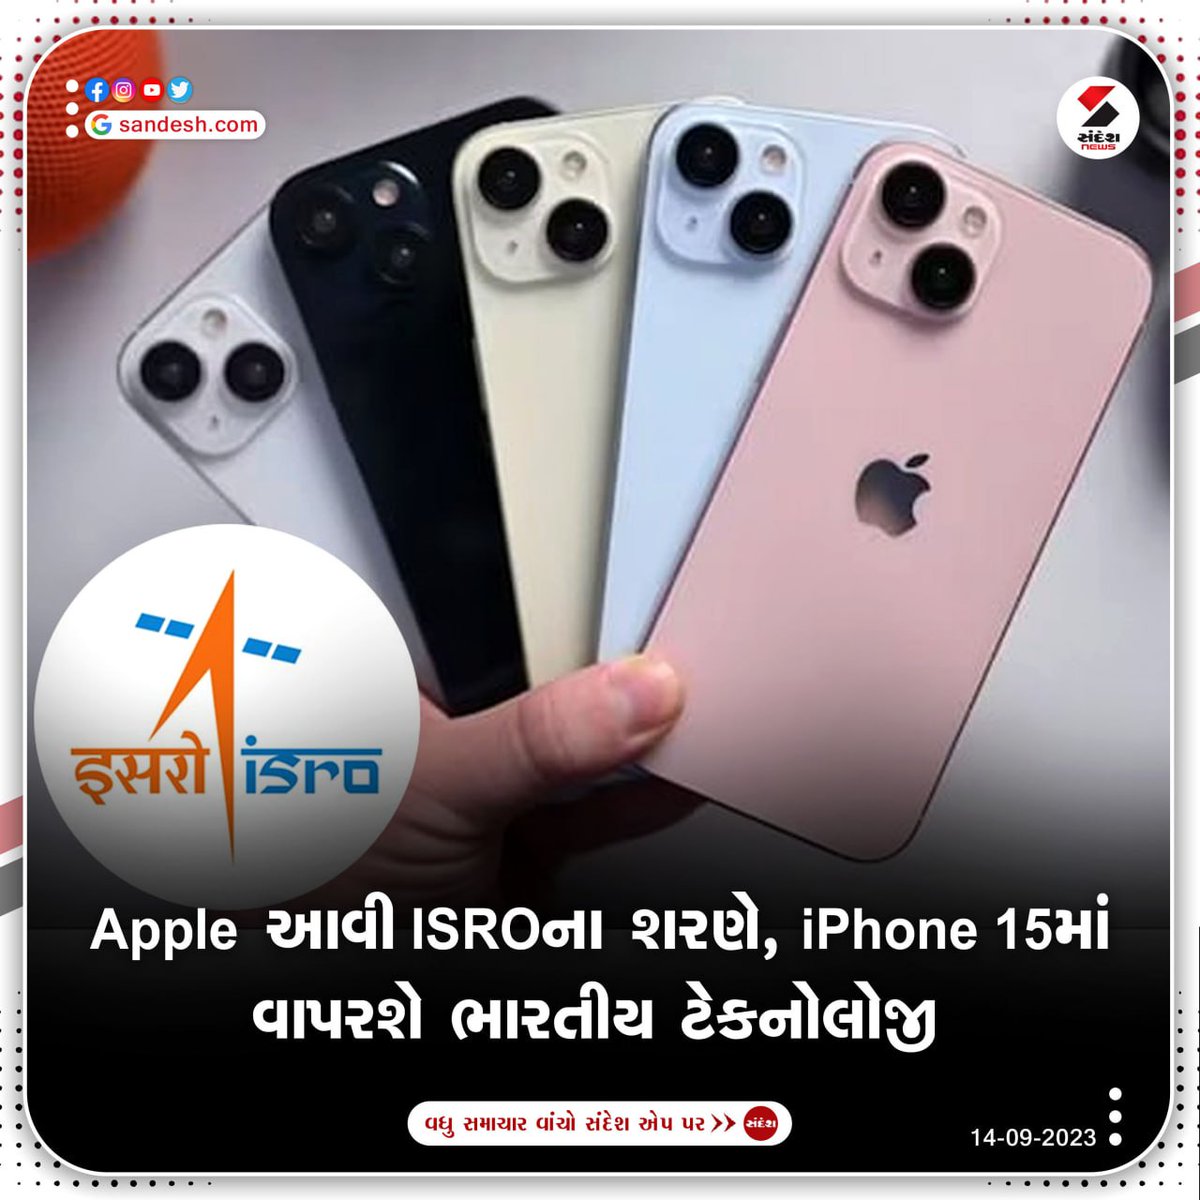 Apple આવી ISROના શરણે, iPhone 15માં વાપરશે ભારતીય ટેકનોલોજી

#Apple #iPhone #iPhone15 #iPhone15Series #ISRO #NavigationSystem #GPS #GPSSystem #NavIC #Trending #SandeshNews